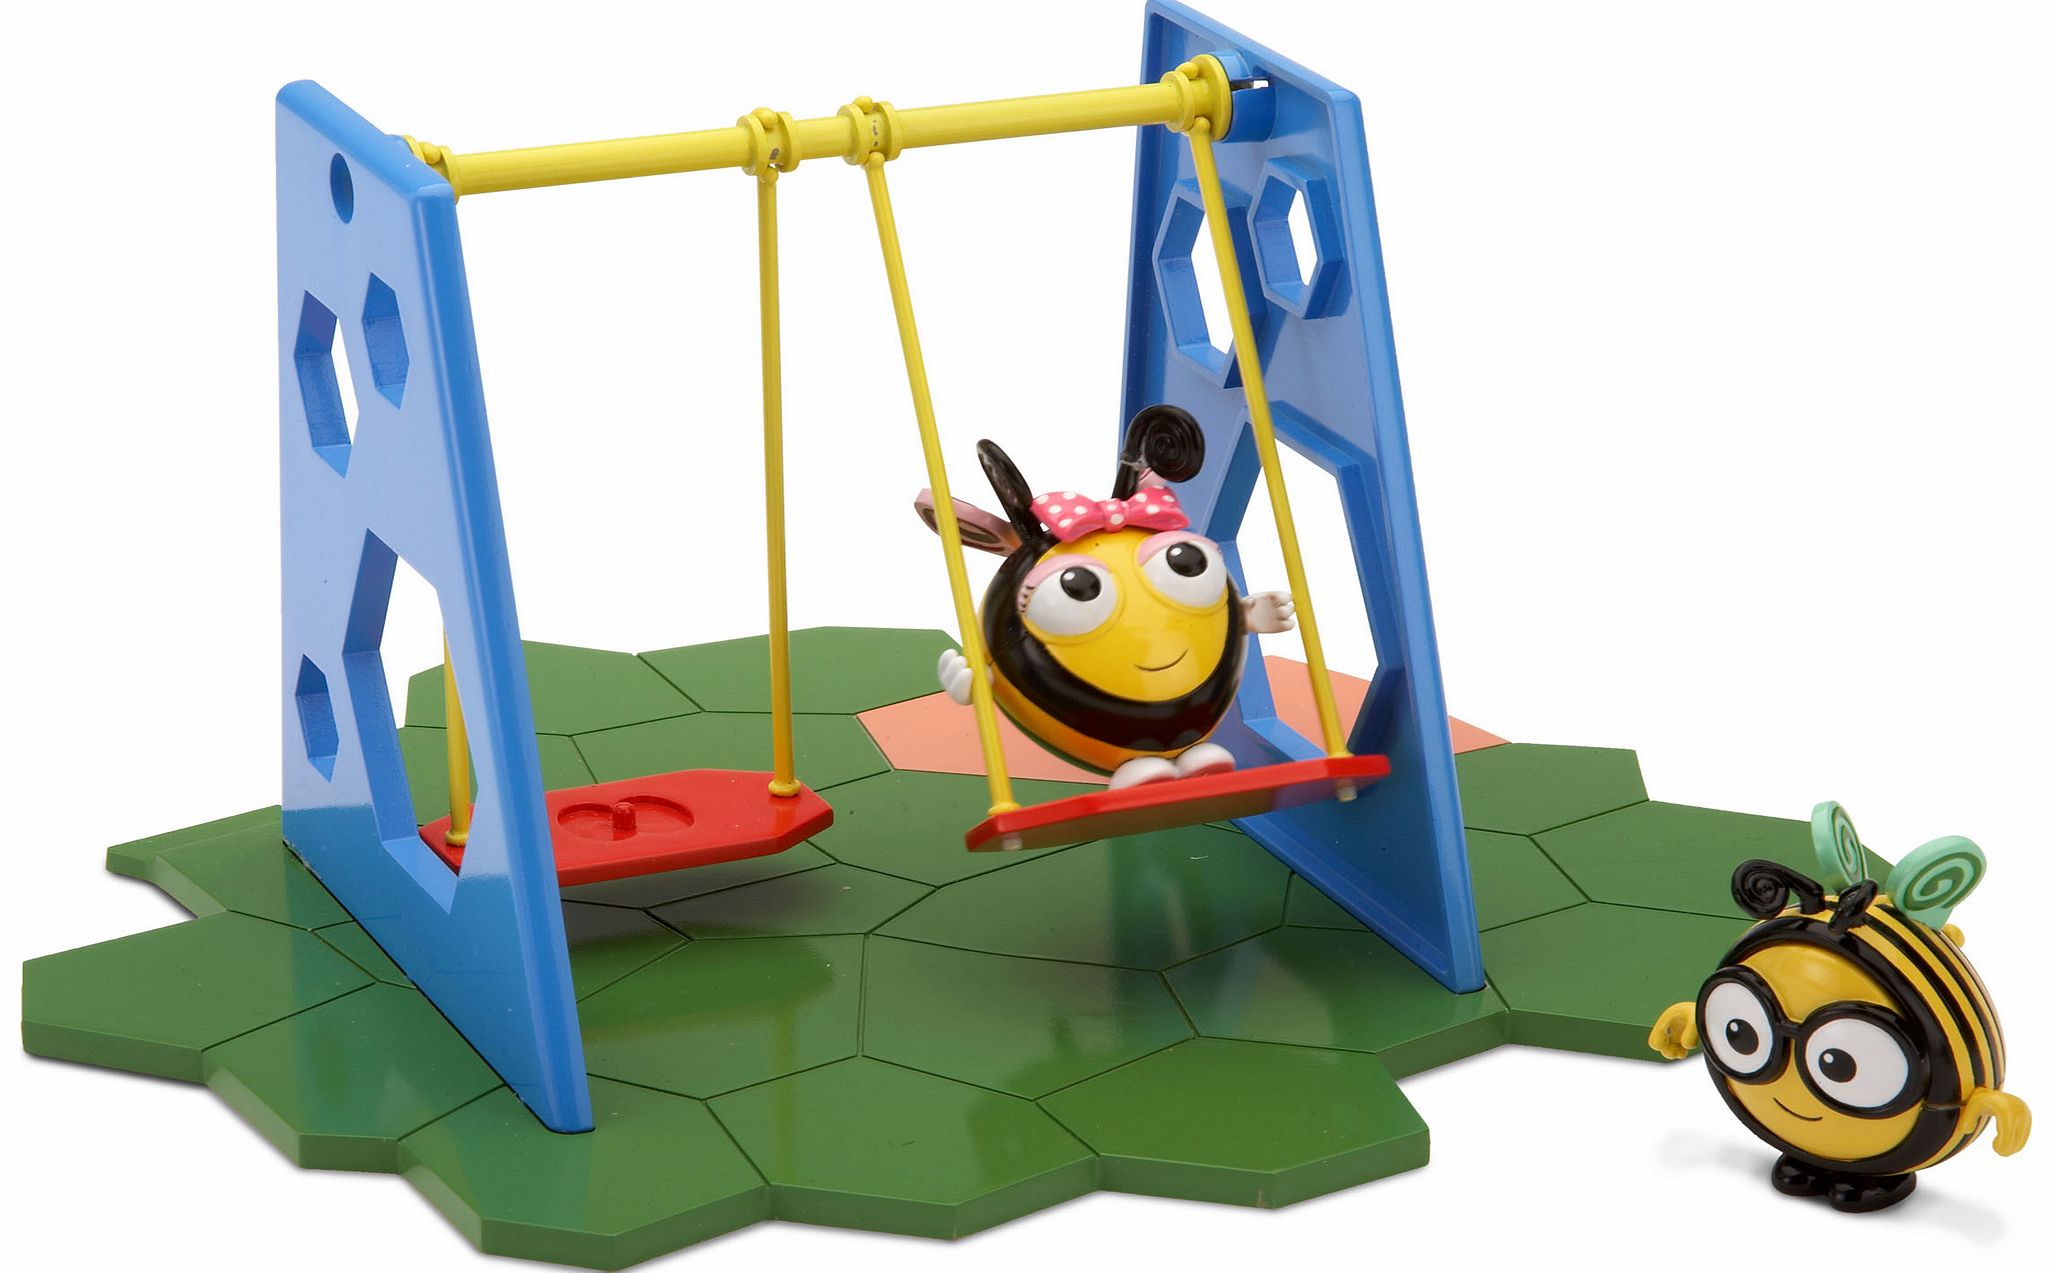 The Hive Swing Playground Set